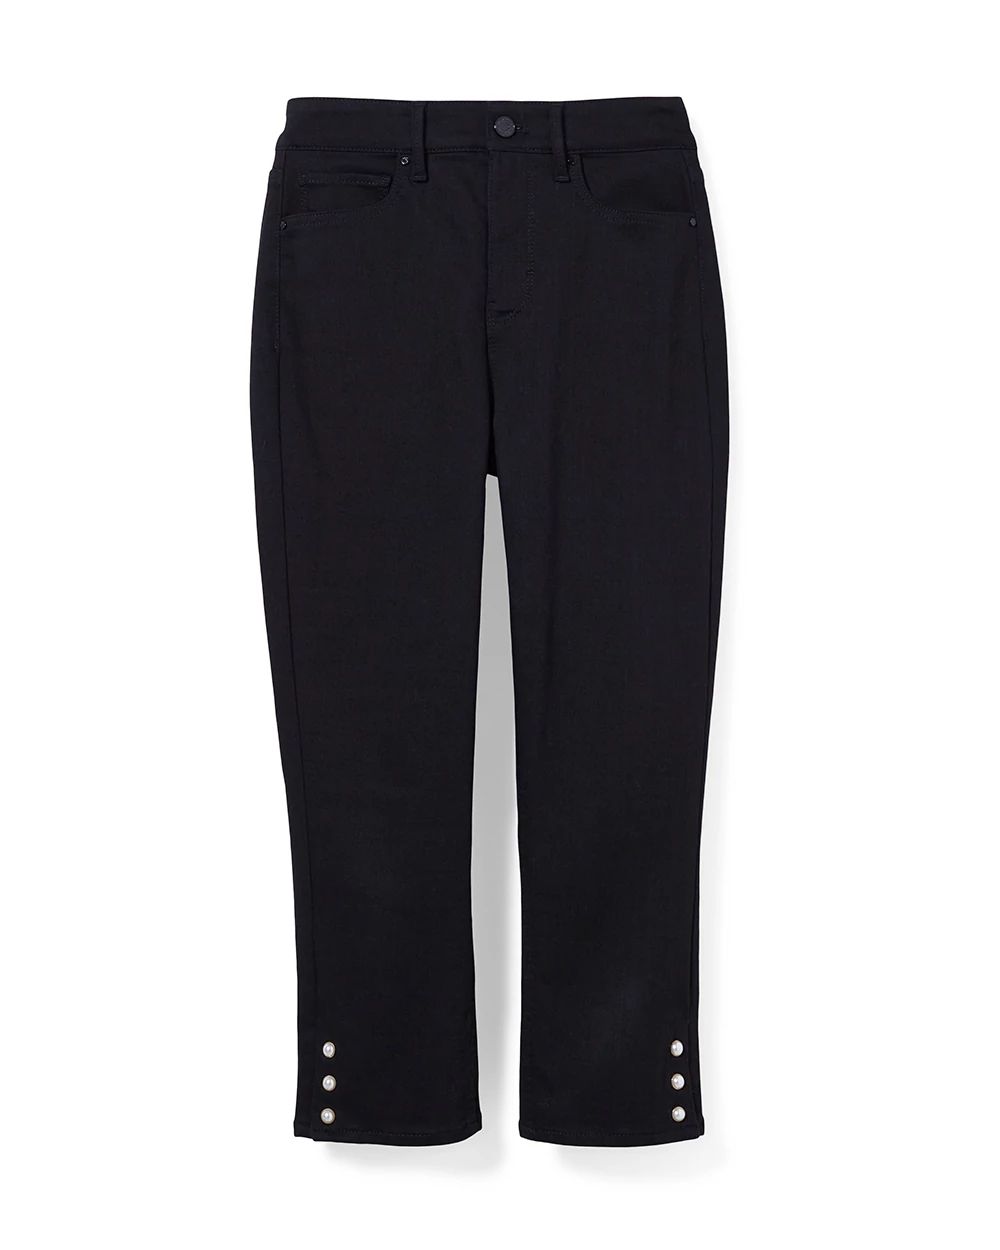 High-Rise Button Hem Black Slim Capri Jeans click to view larger image.